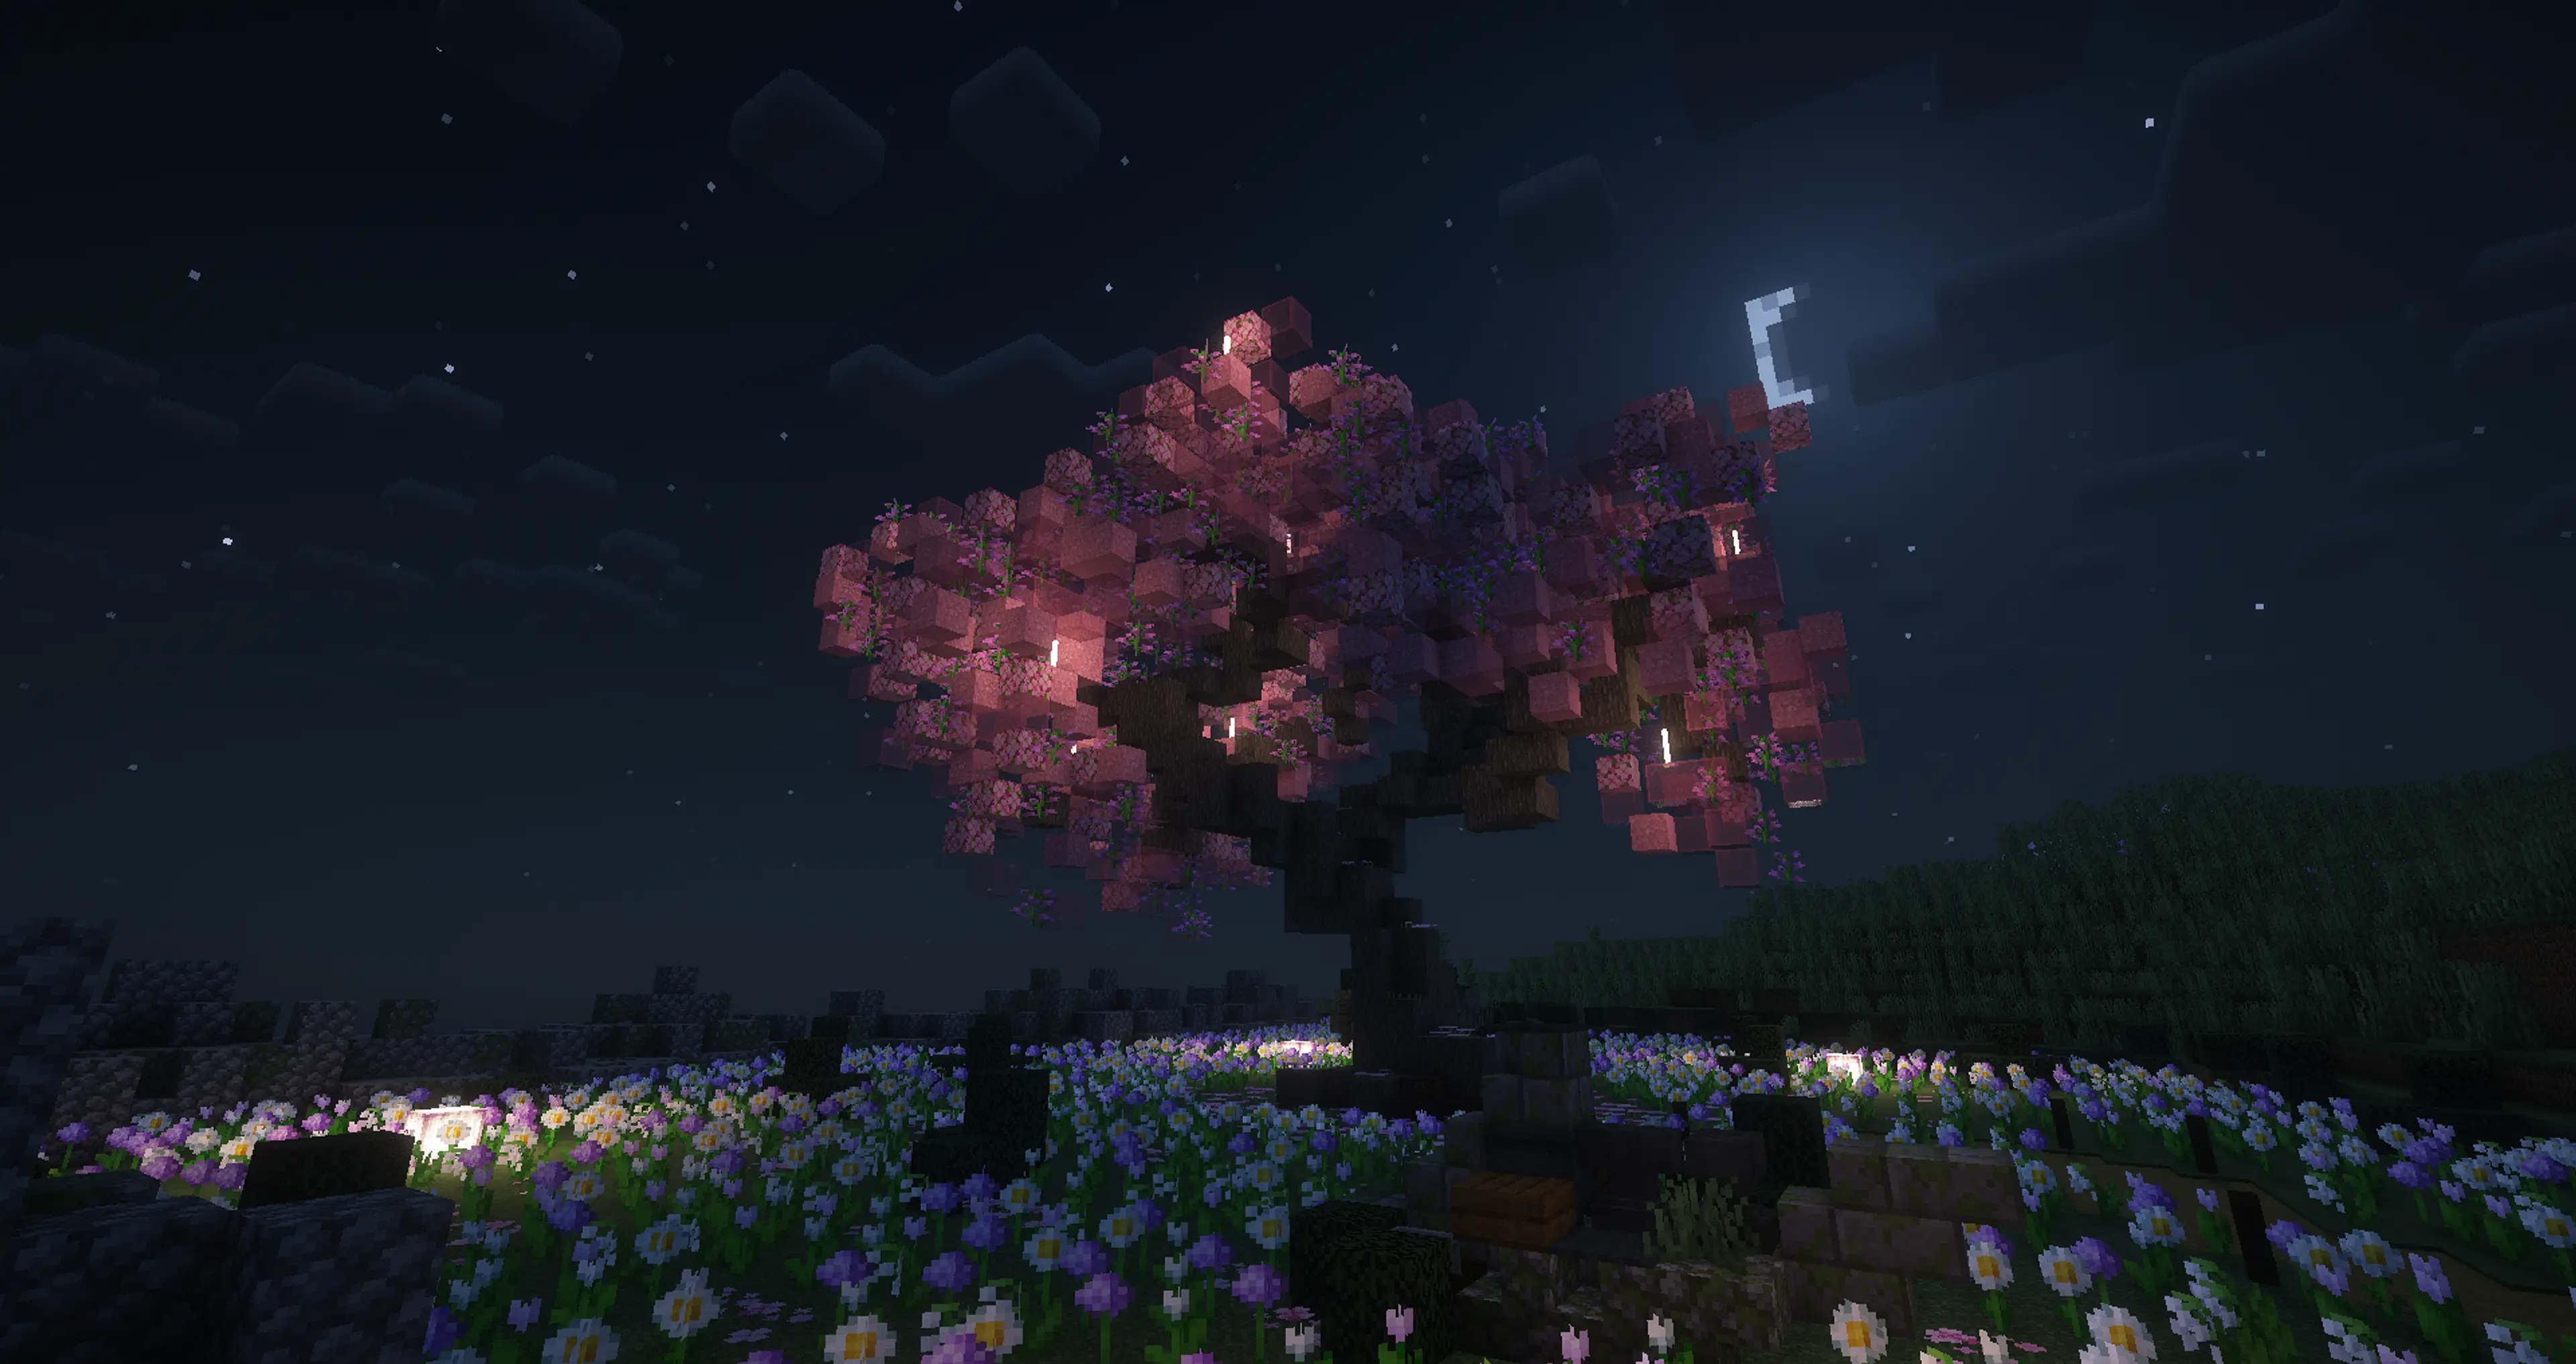 Night view under the cherry blossom tree